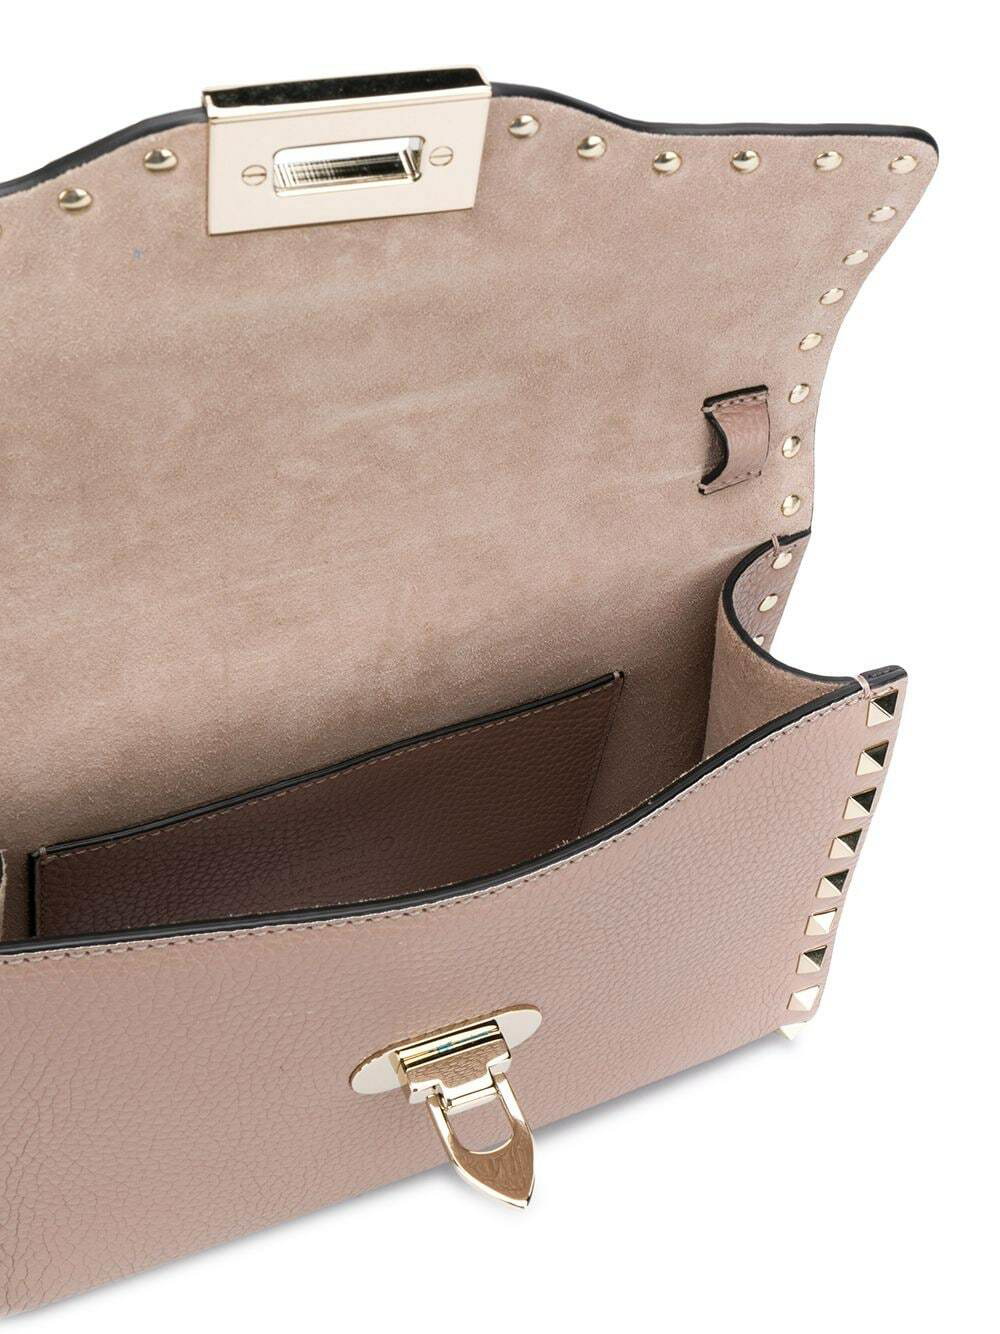 VALENTINO GARAVANI: Rockstud bag in textured leather - Pink